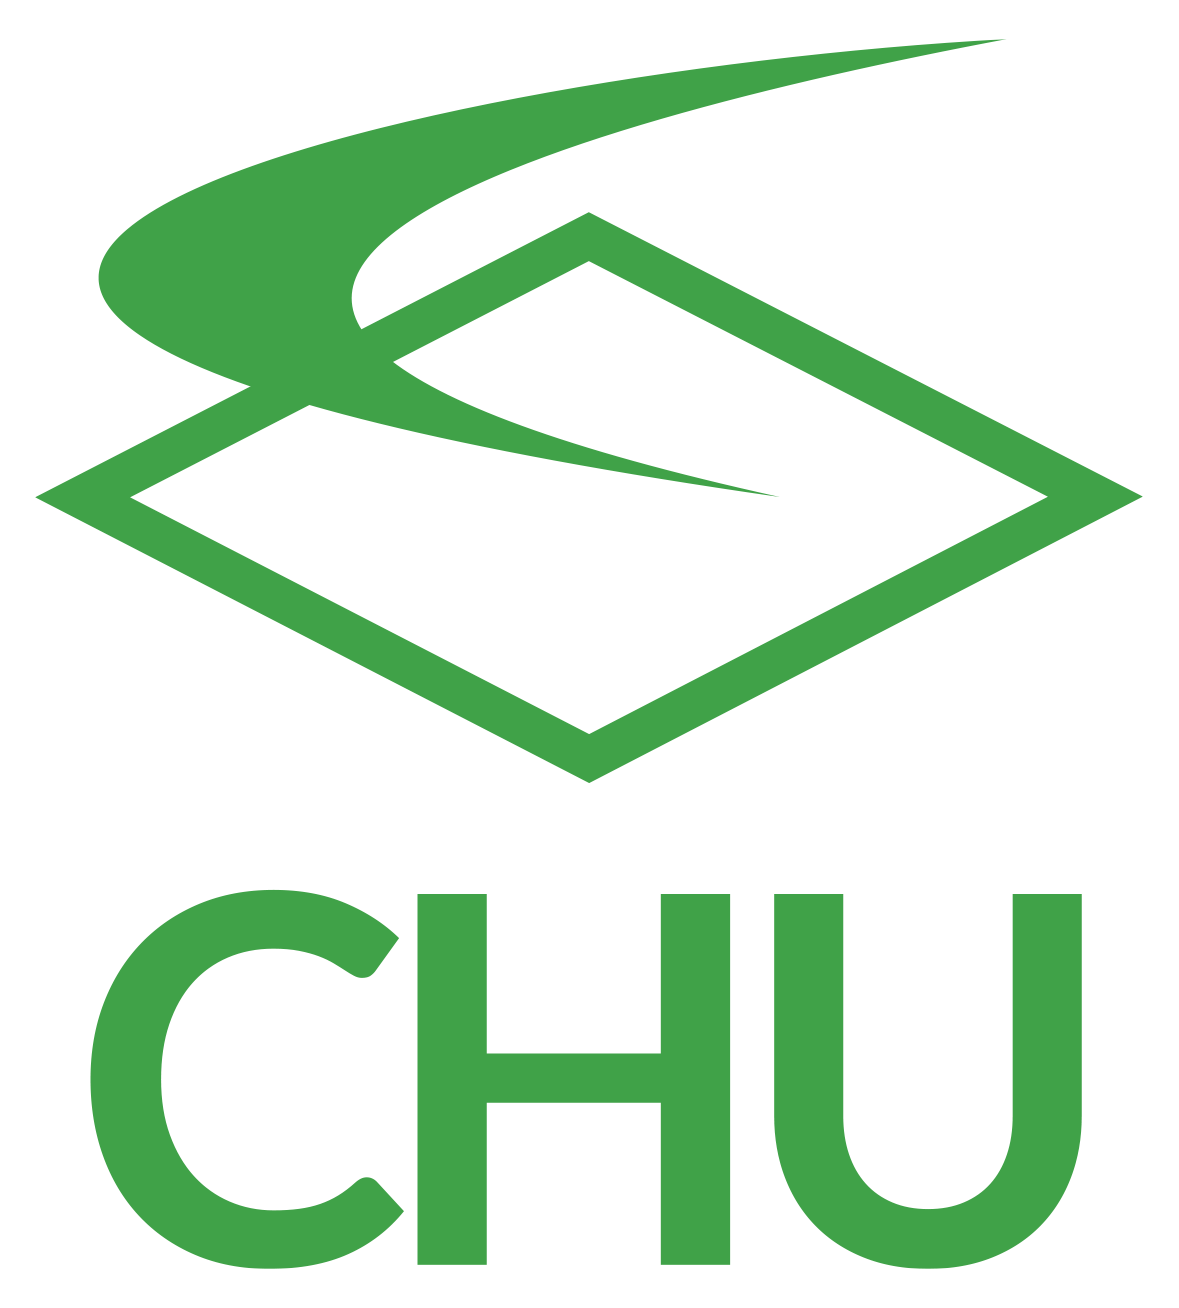 CHU Logo